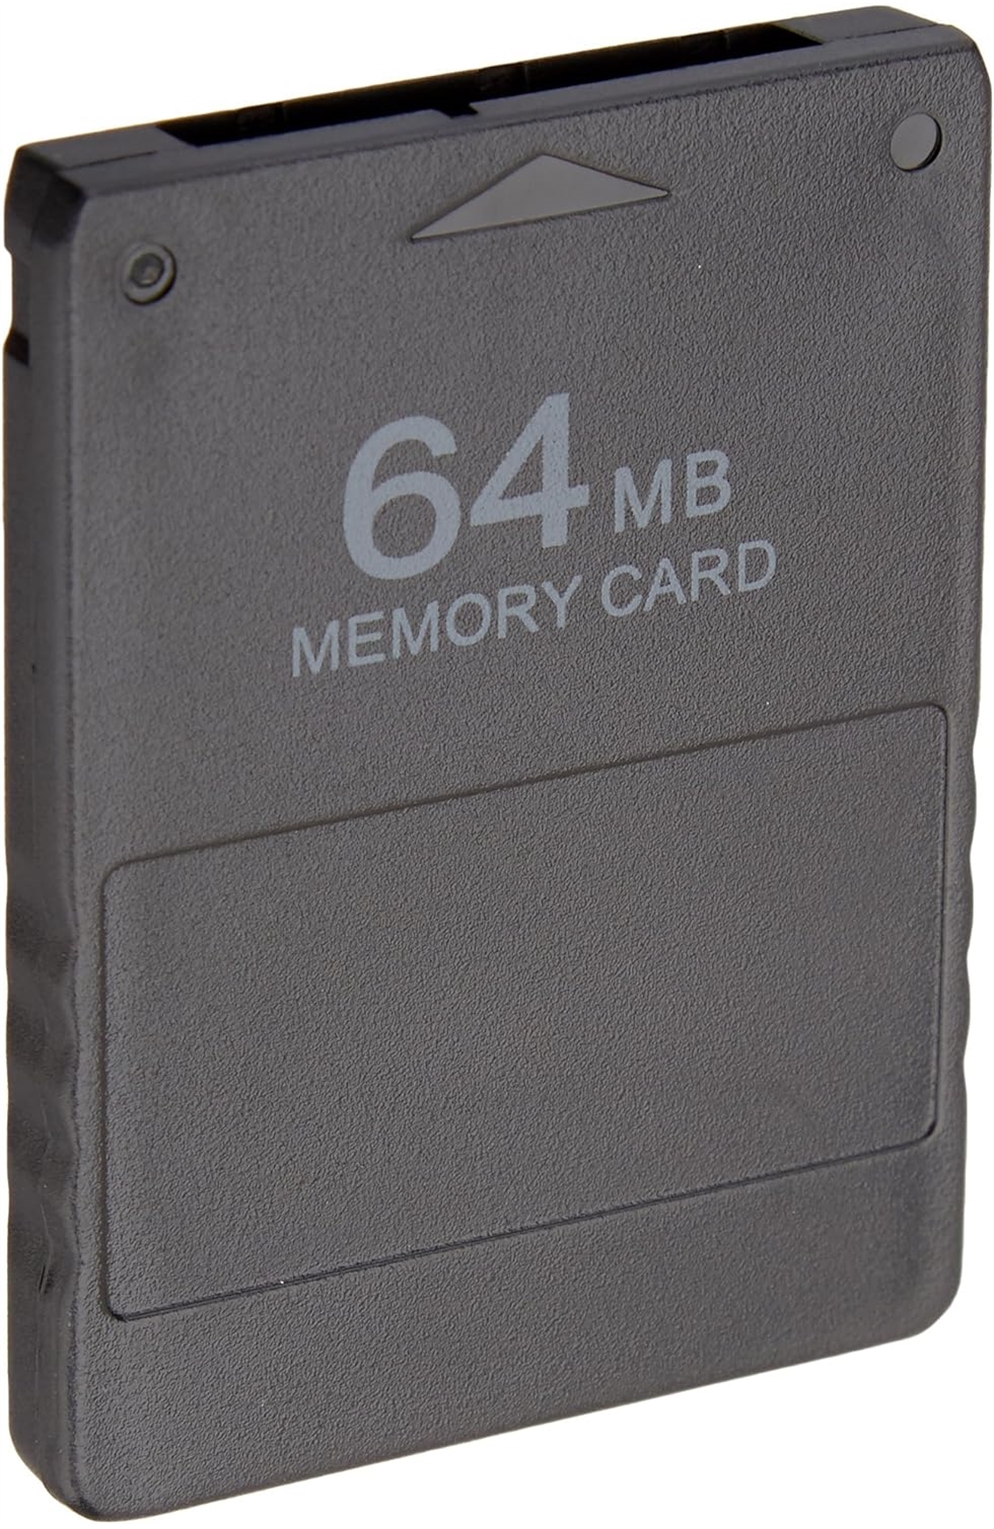 Ttx Tech Memory Card Playstation 2 64Mb